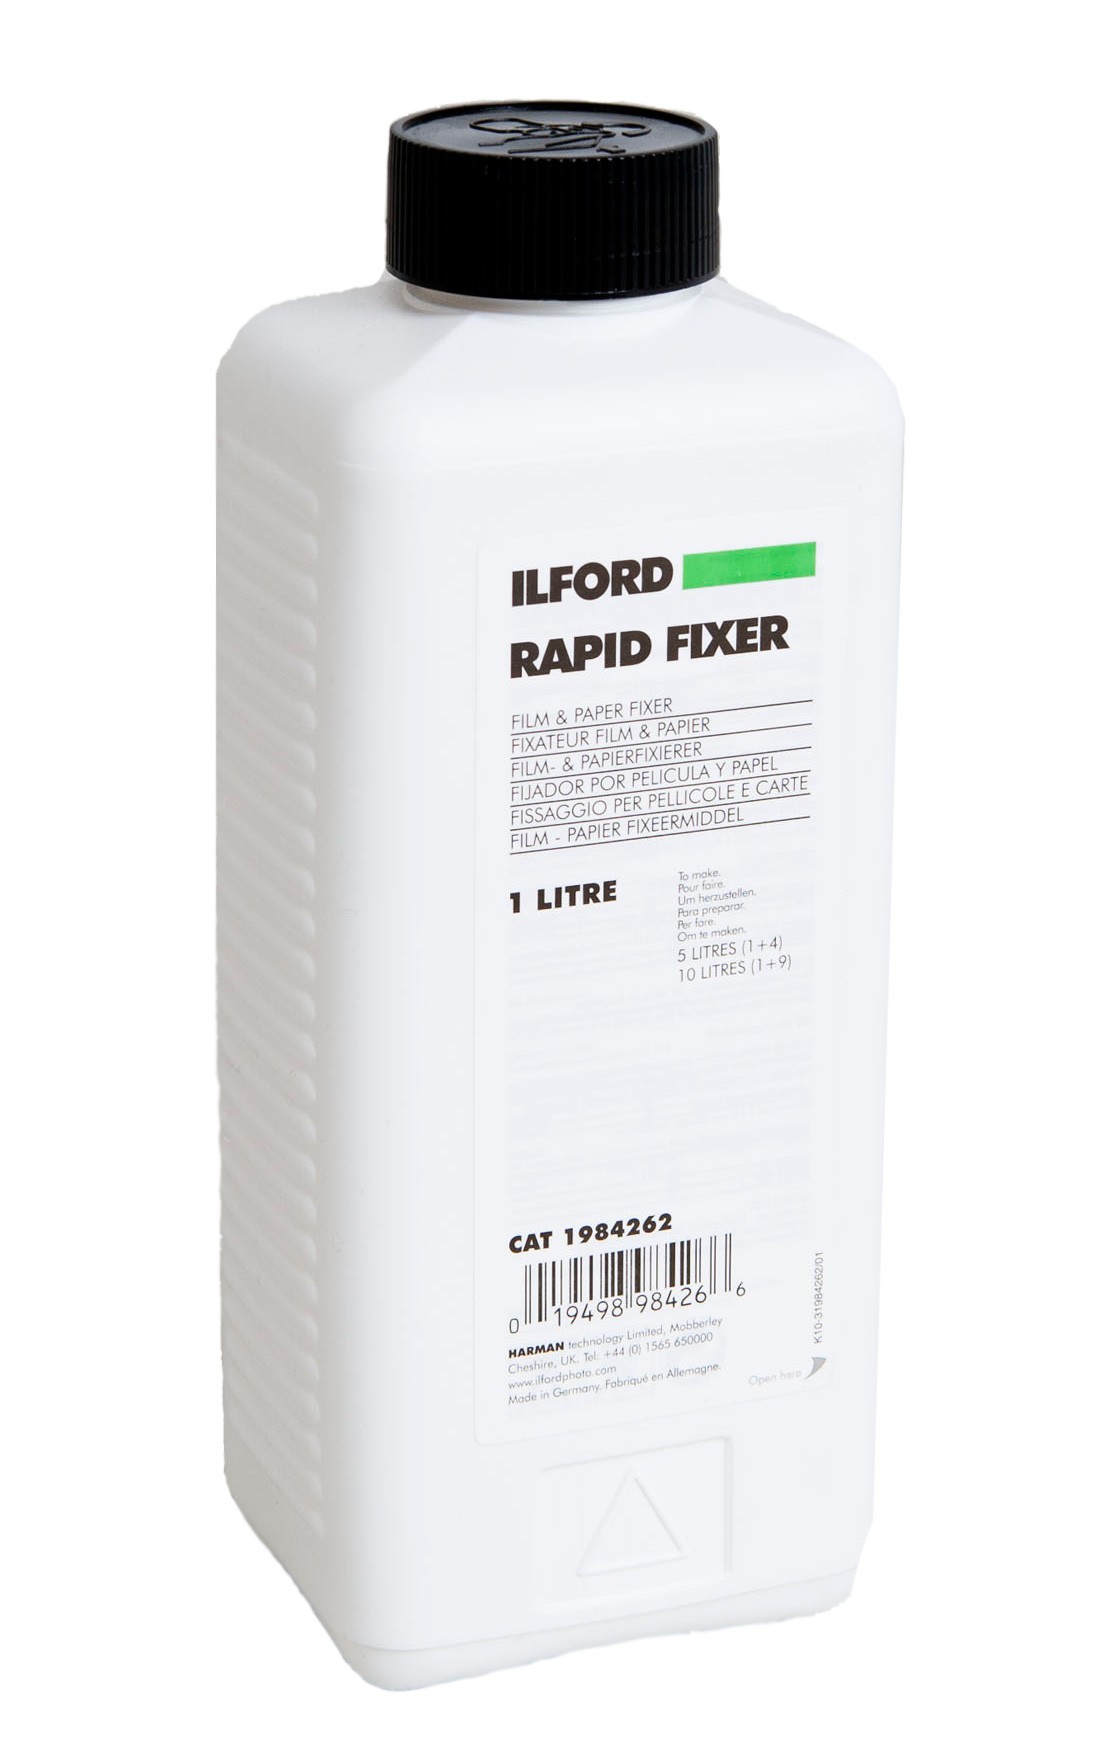 Ilford закрепитель Rapid Fixer 1l (1984262)